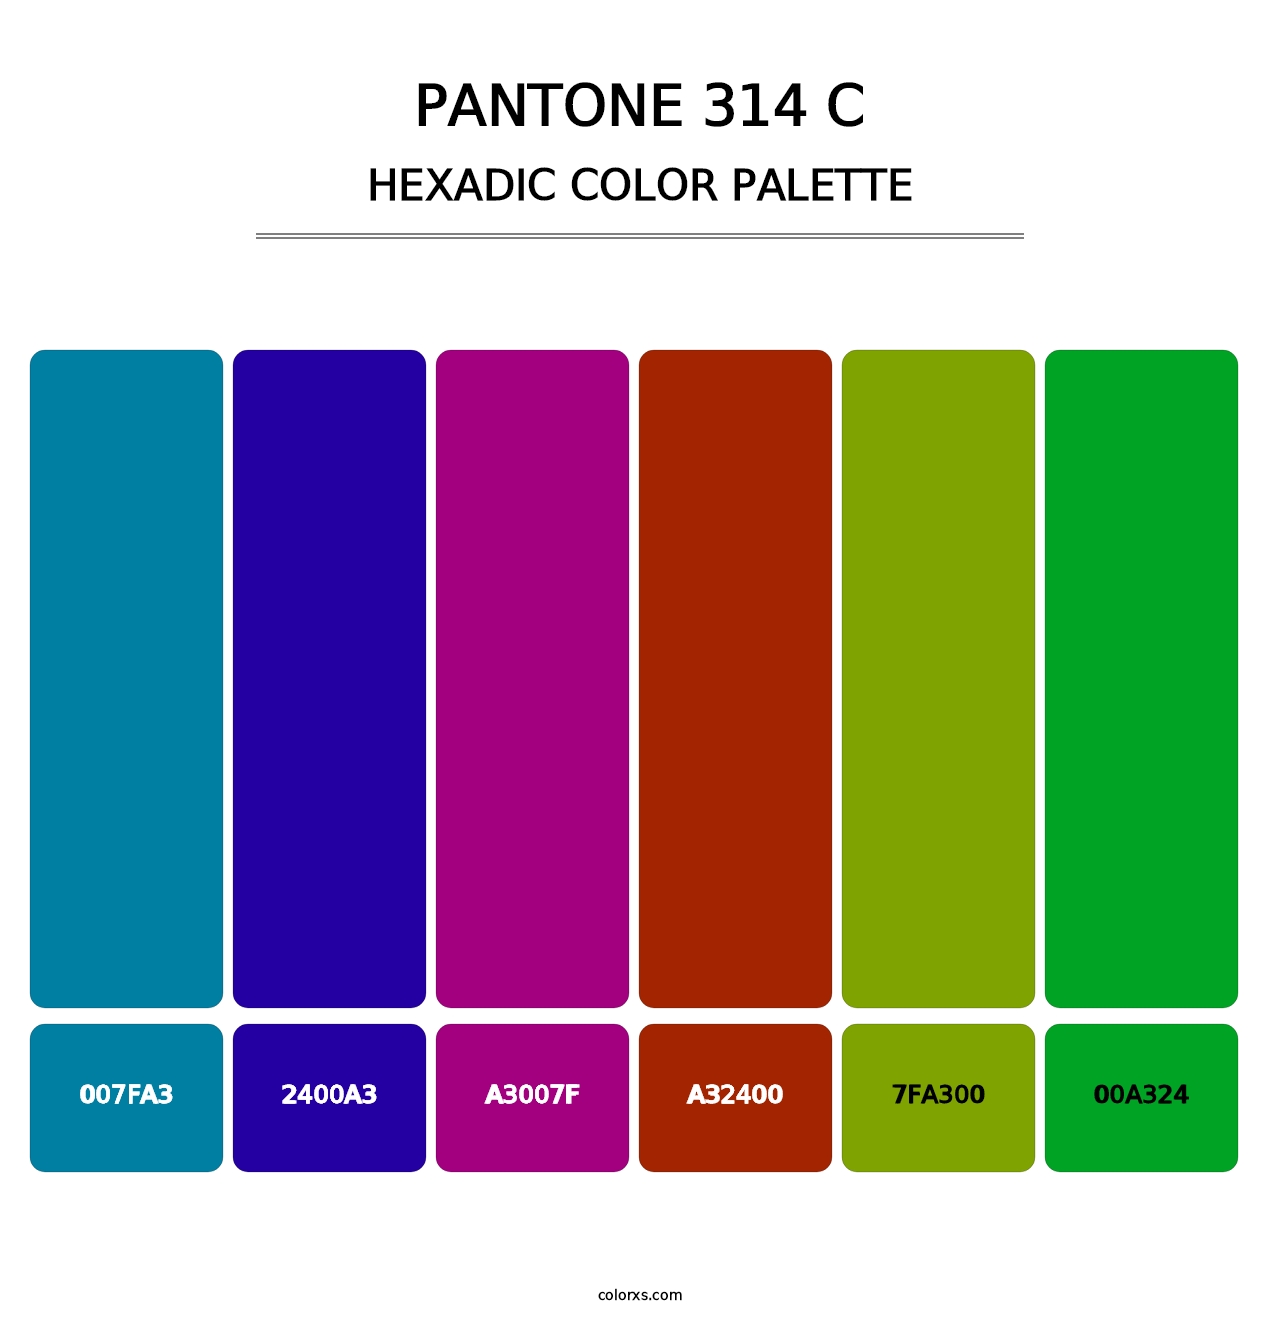 PANTONE 314 C - Hexadic Color Palette